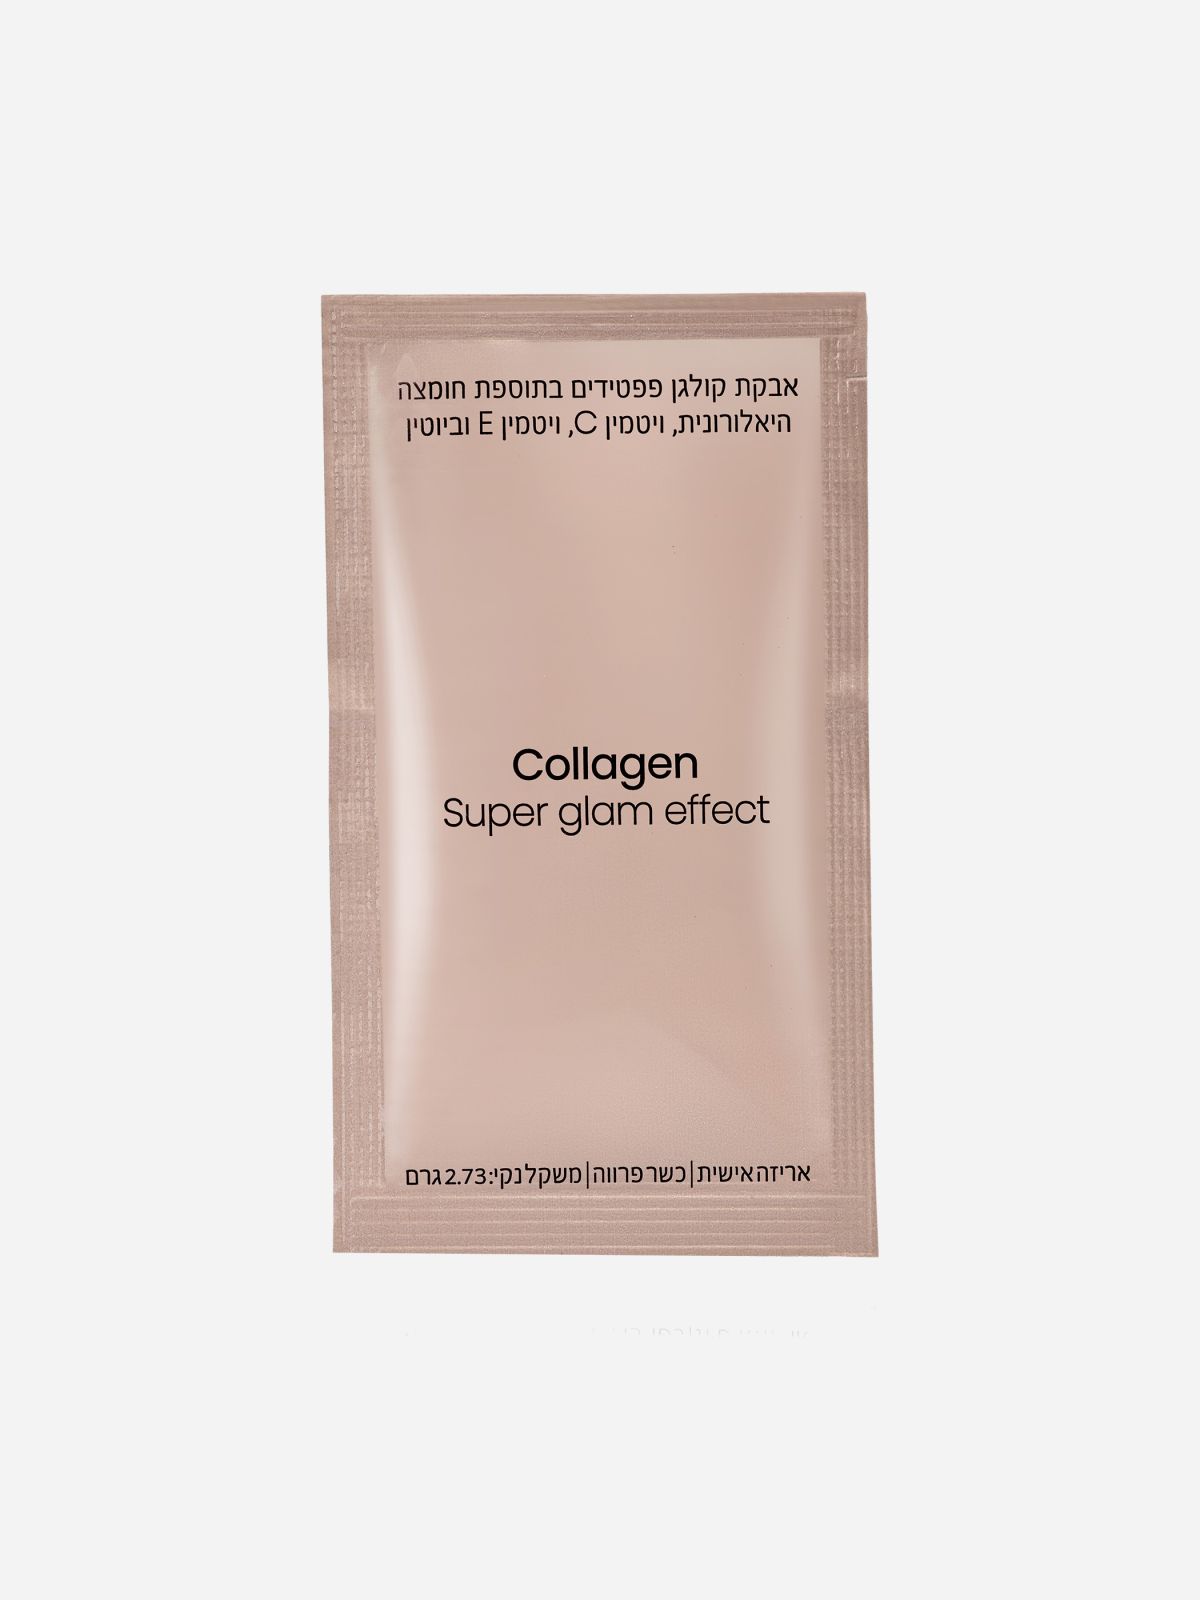  אבקת קולגן ״Collagen Powder super glam effect של PELLE